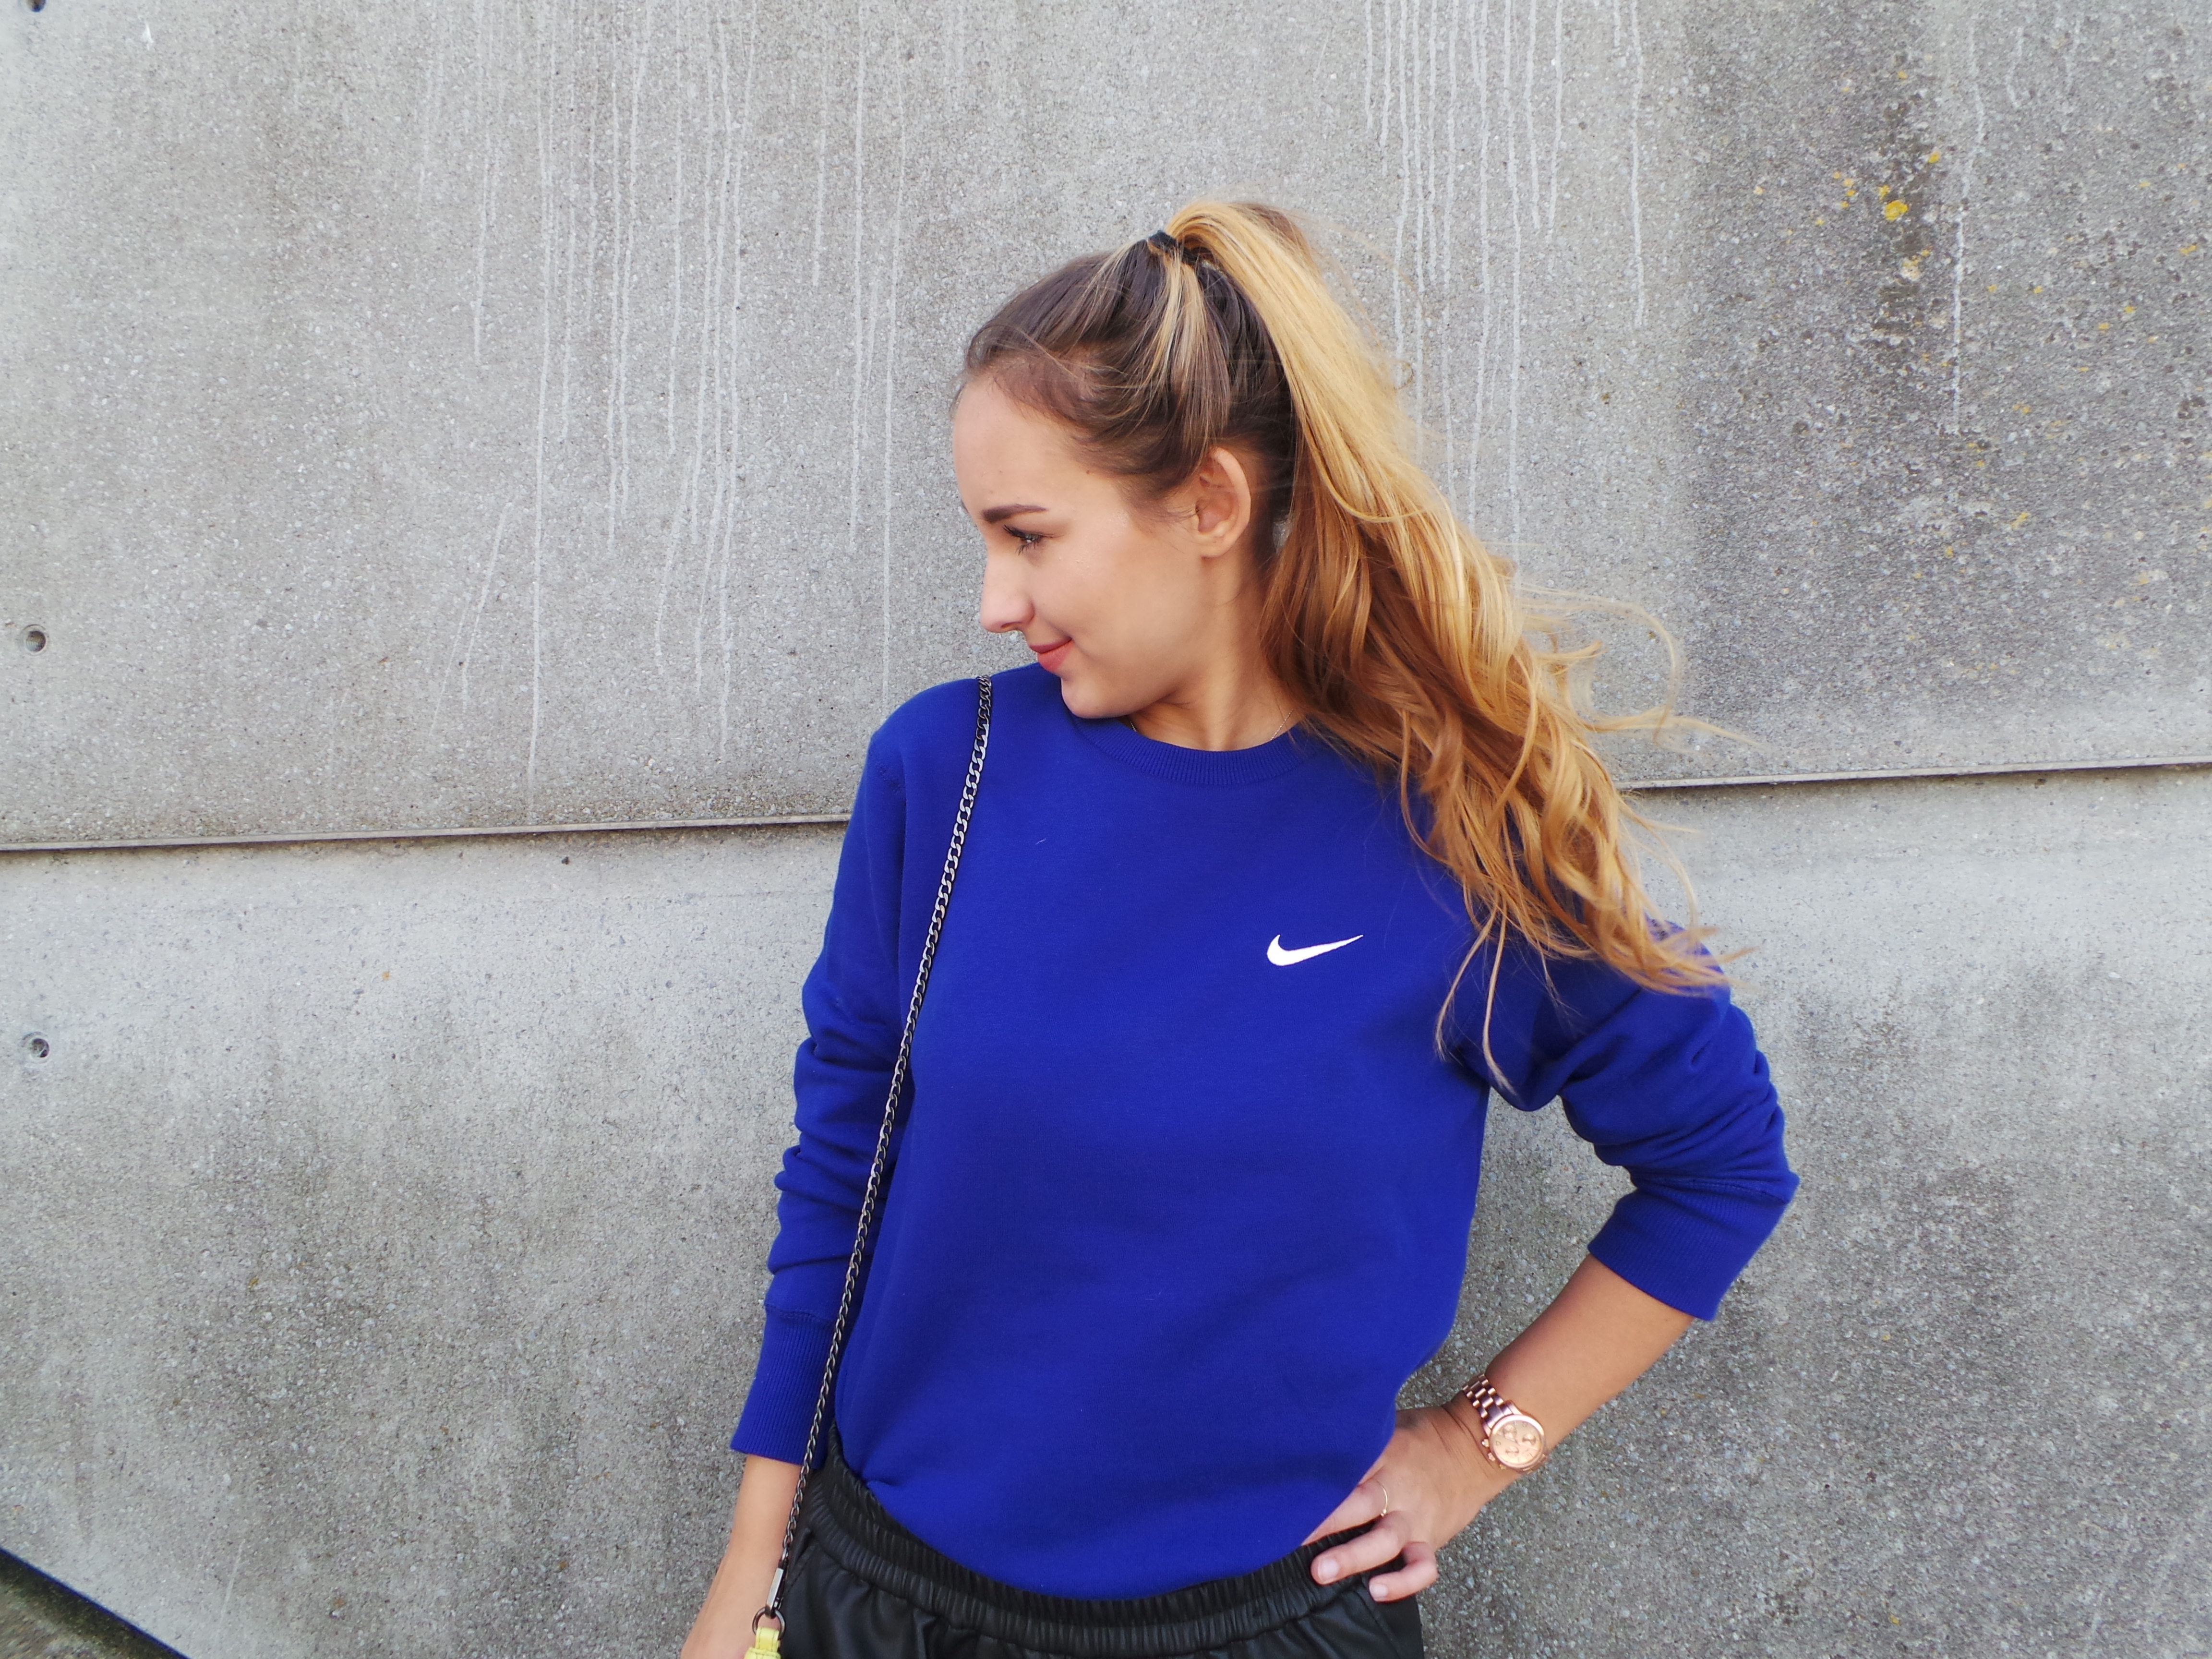 Aquarium Maar hebben OOTD #19: Nike sweater | Natalia Victoria Drzymalska